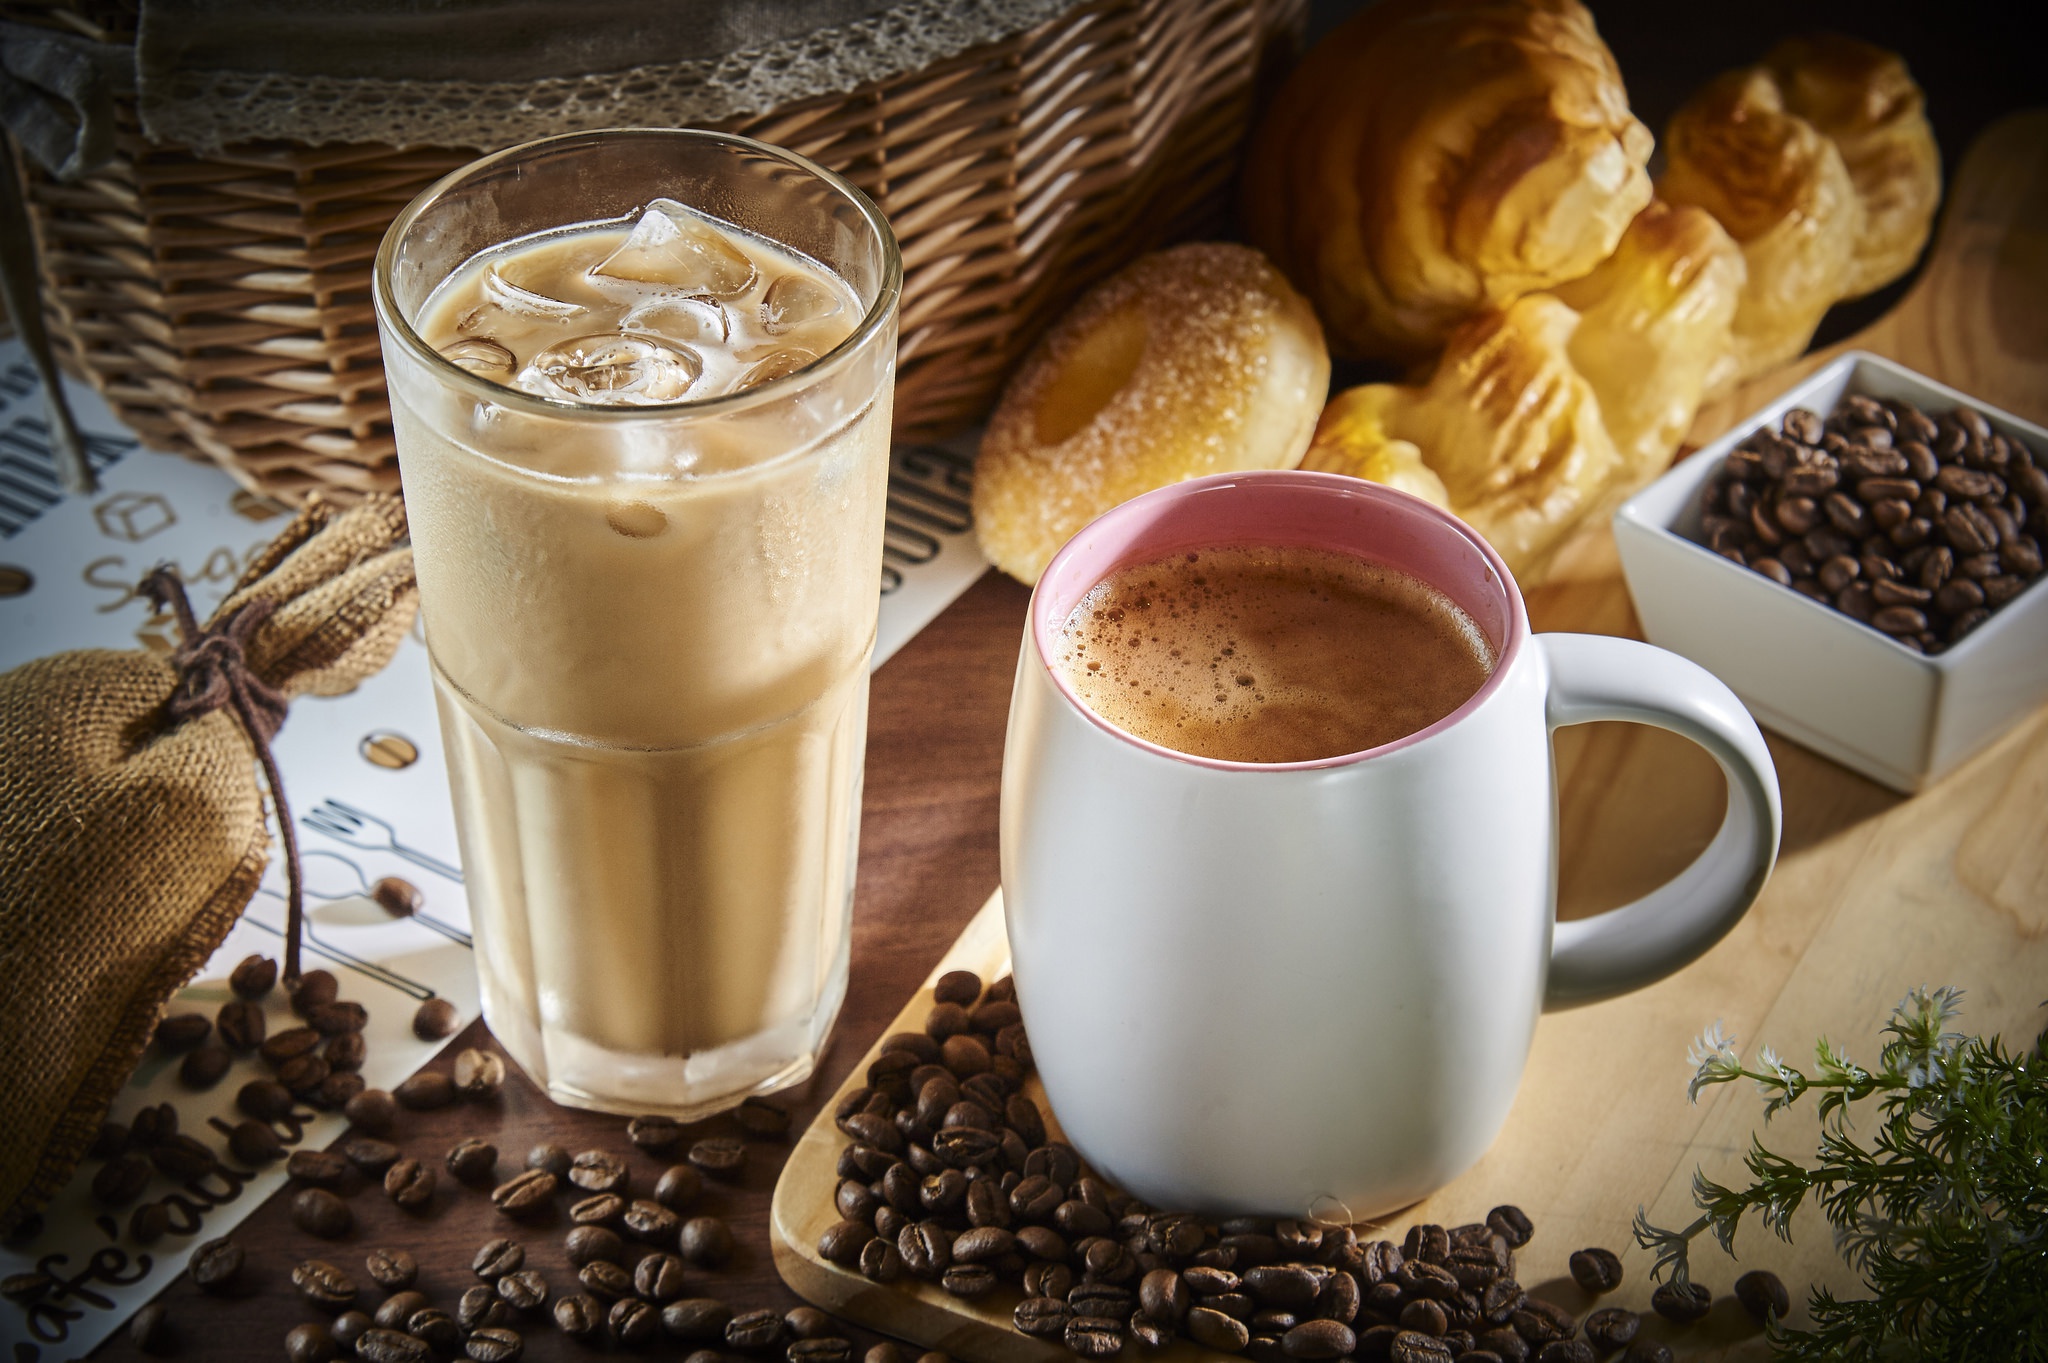 Mug of Hot Coffee and a Tall Glass of Iced Coffee